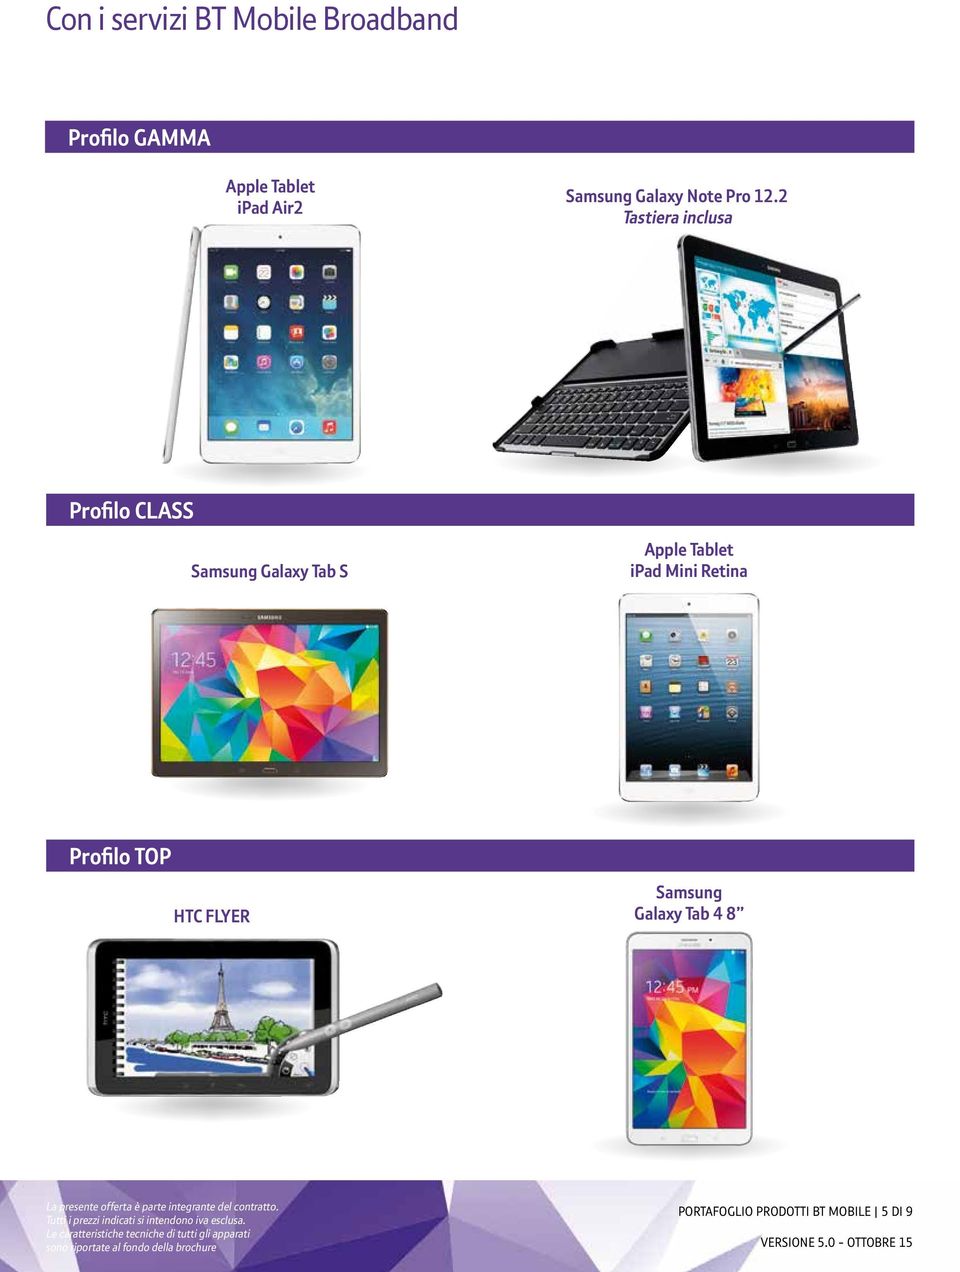 2 Tastiera inclusa Profilo CLASS Galaxy Tab S Apple Tablet